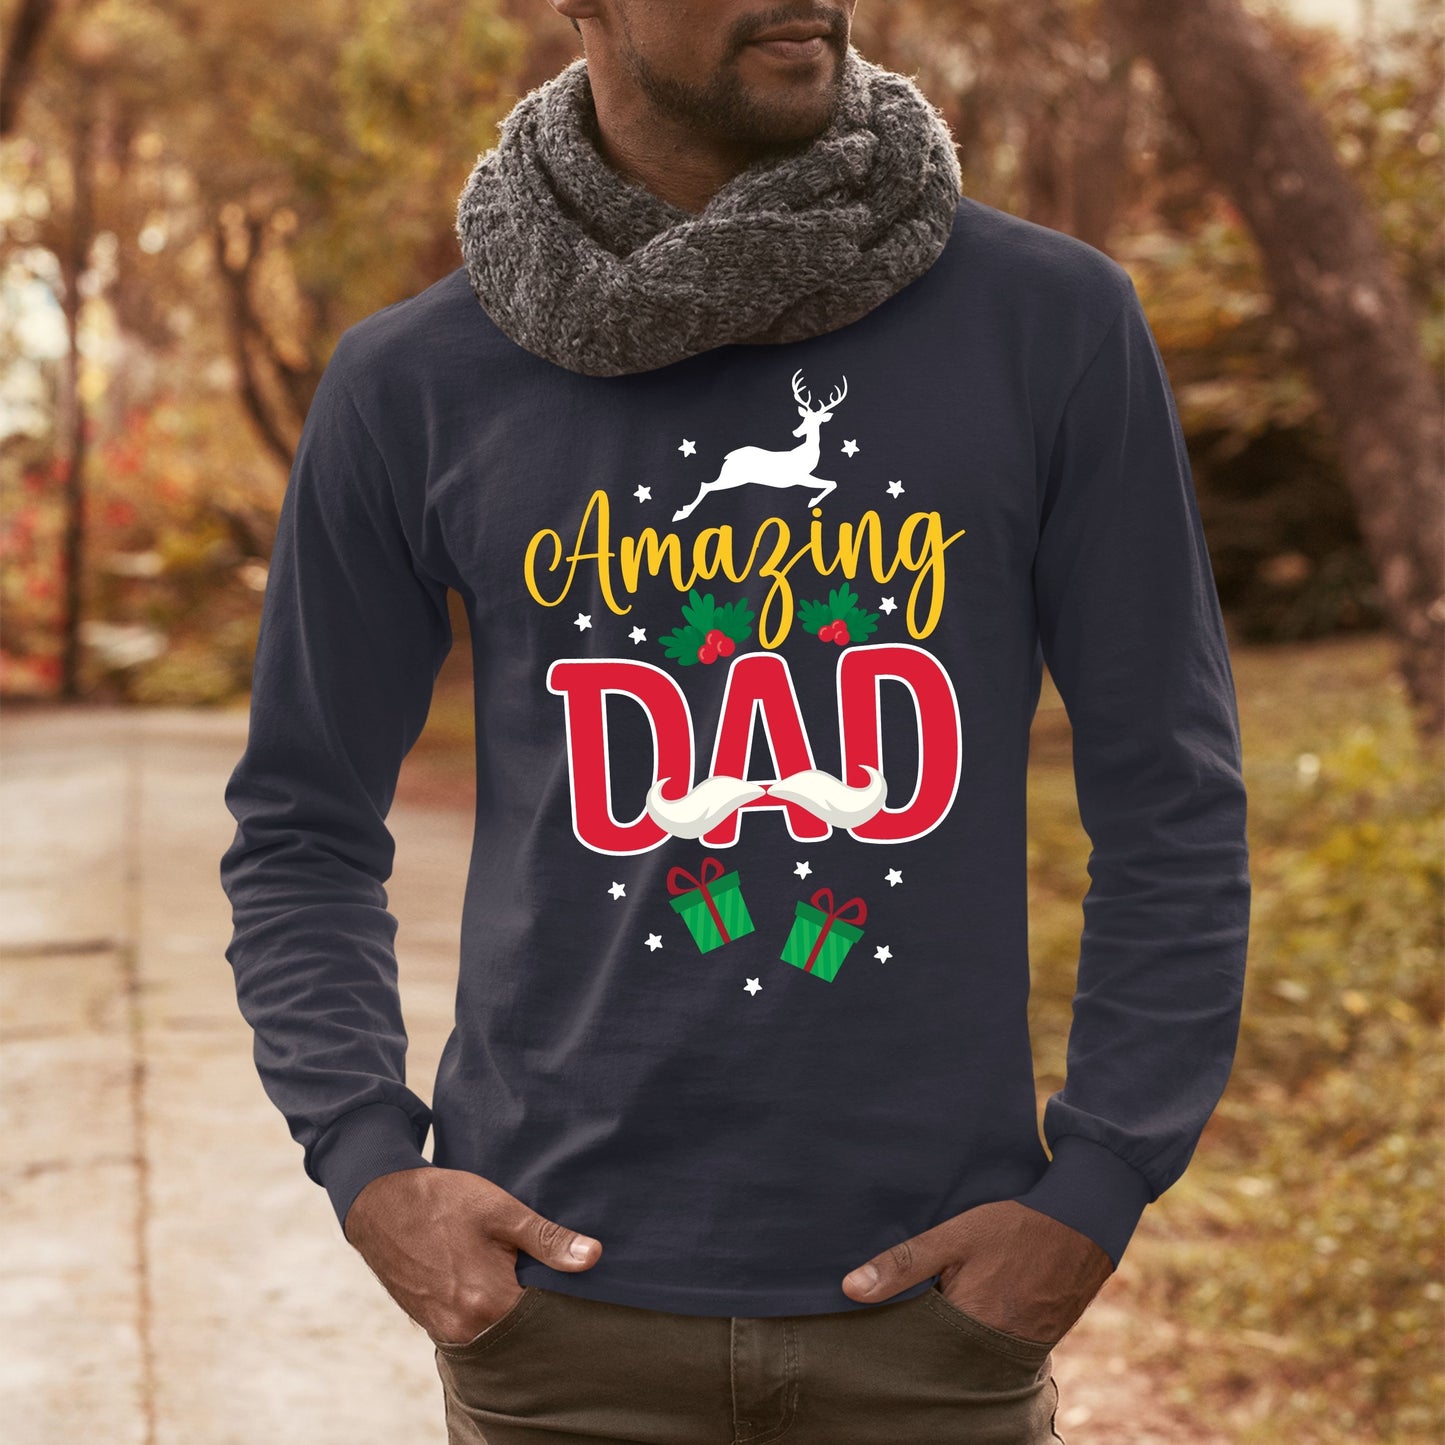 Amazing Dad, Christmas Crewneck For Men, Christmas Long Sleeves, Christmas Present, Christmas Sweater, Christmas Sweatshirt